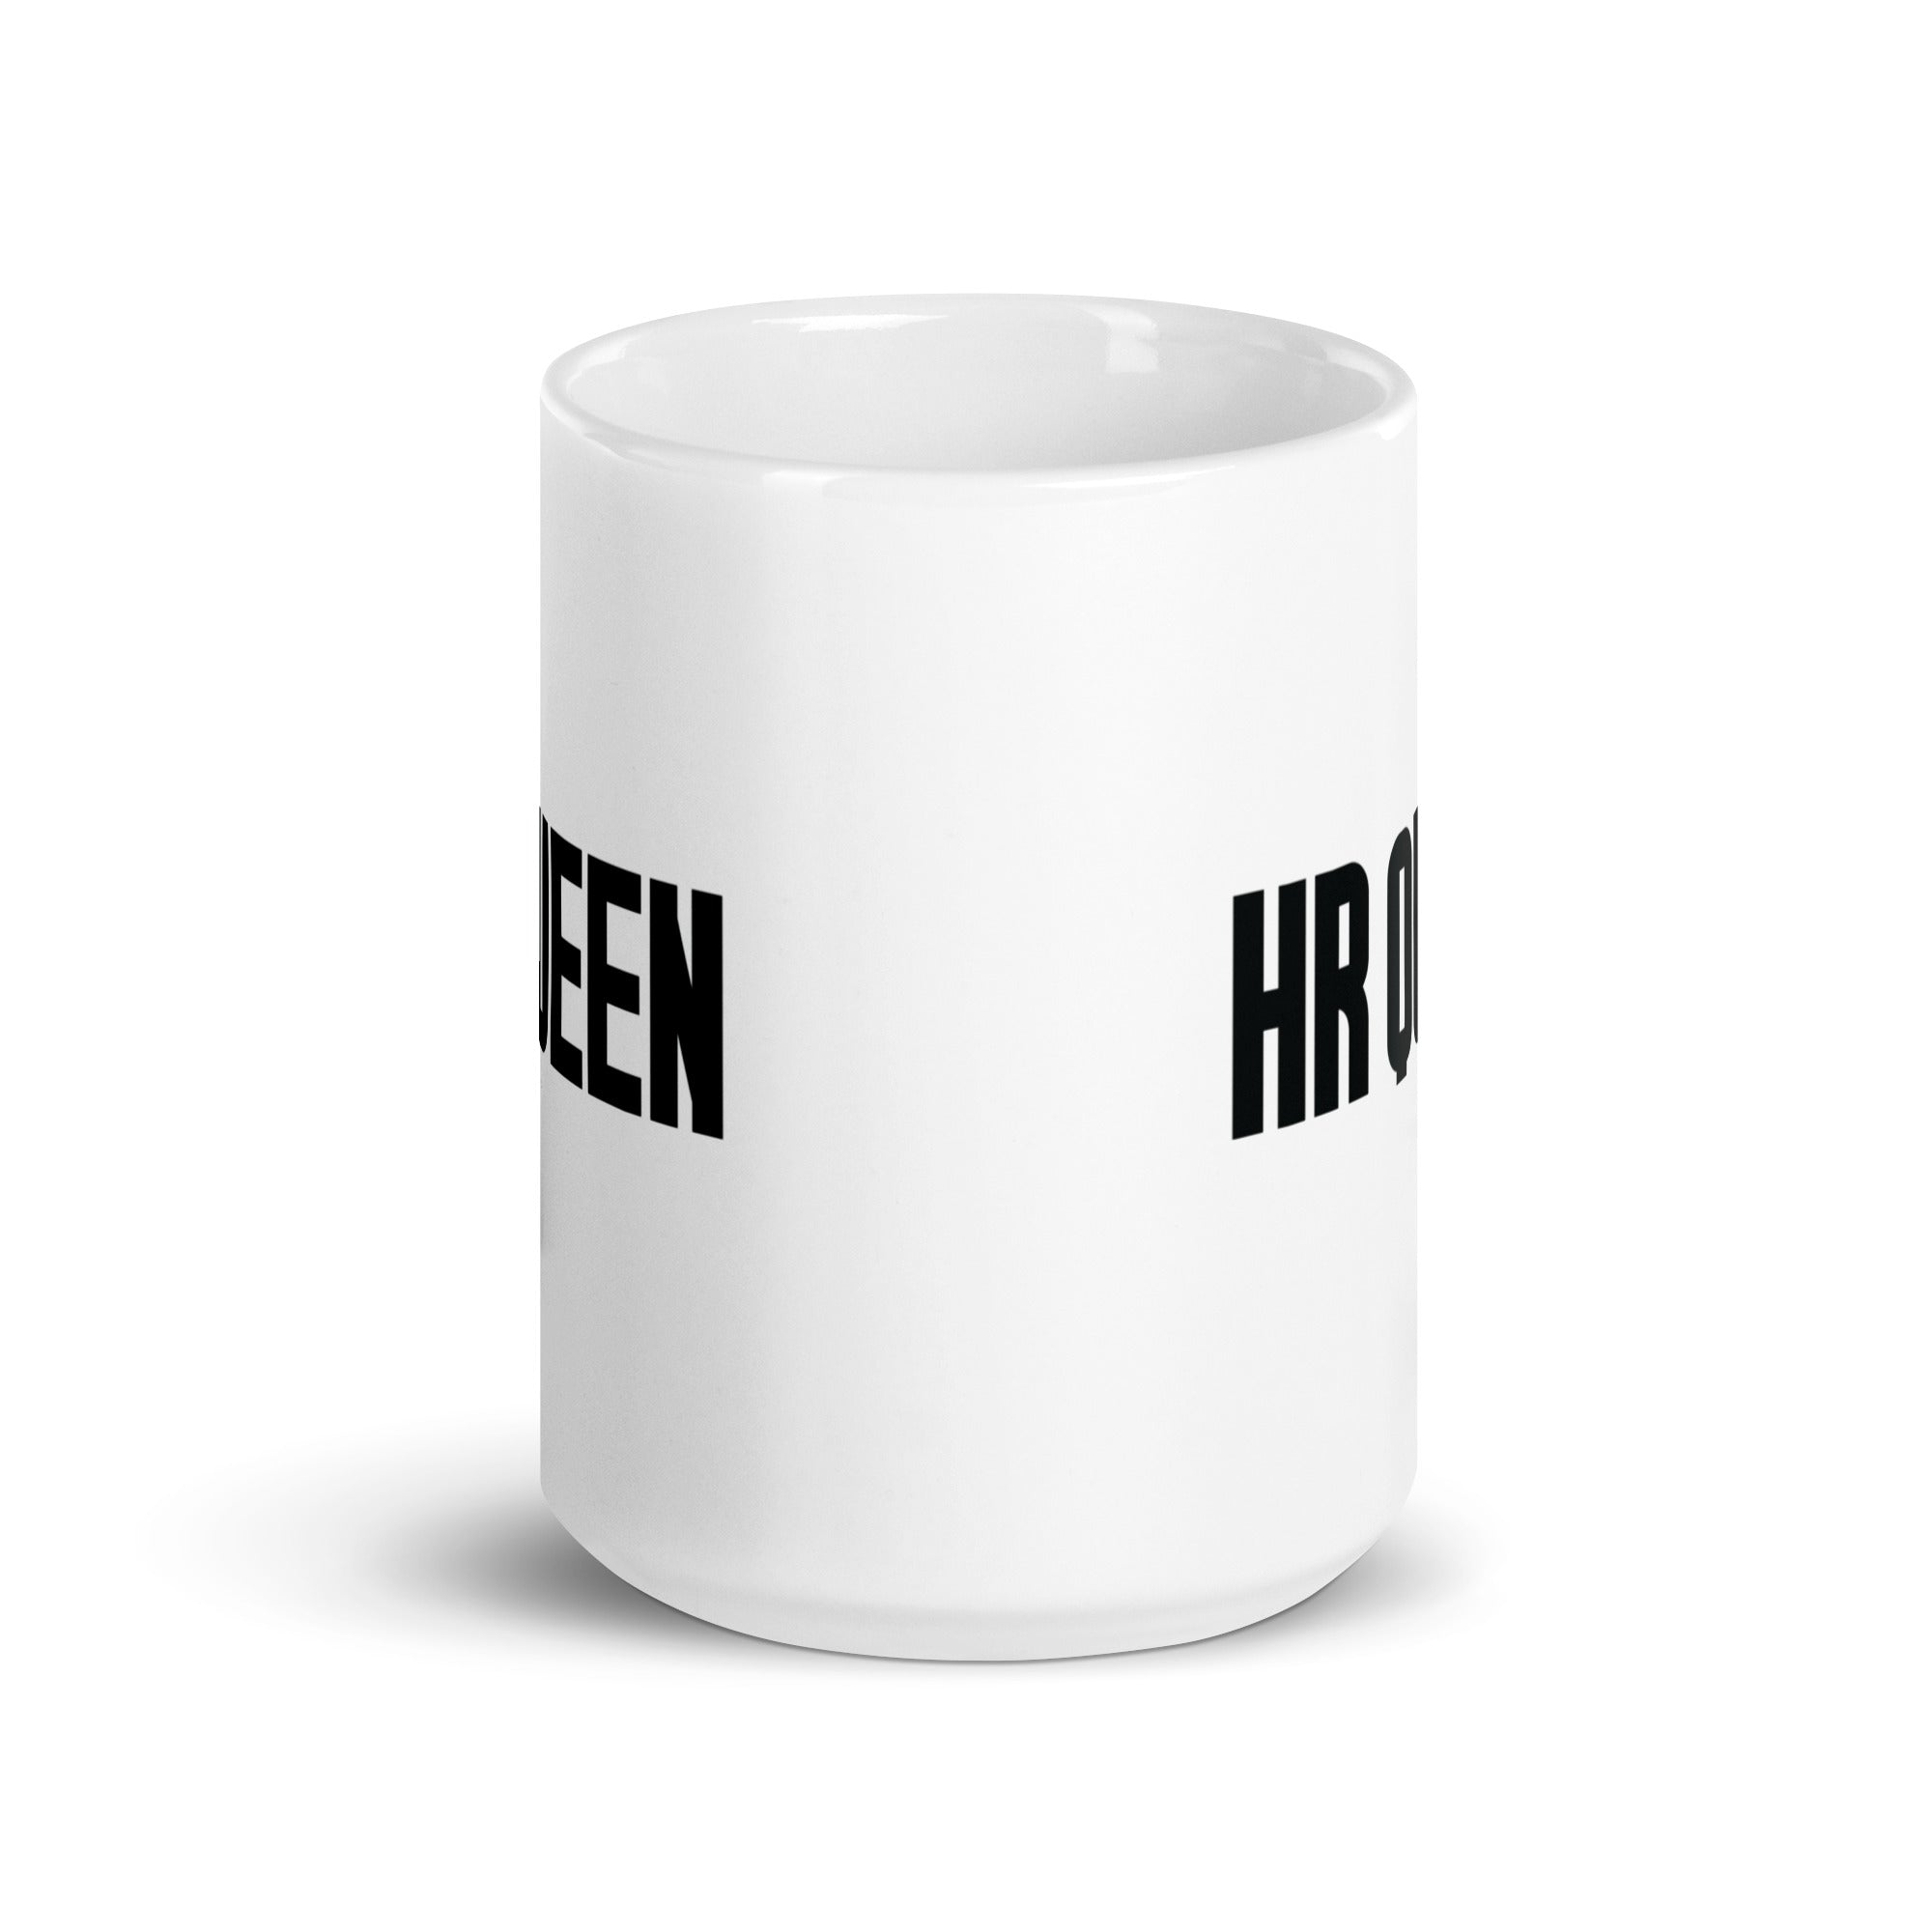 White glossy mug | HR Queen